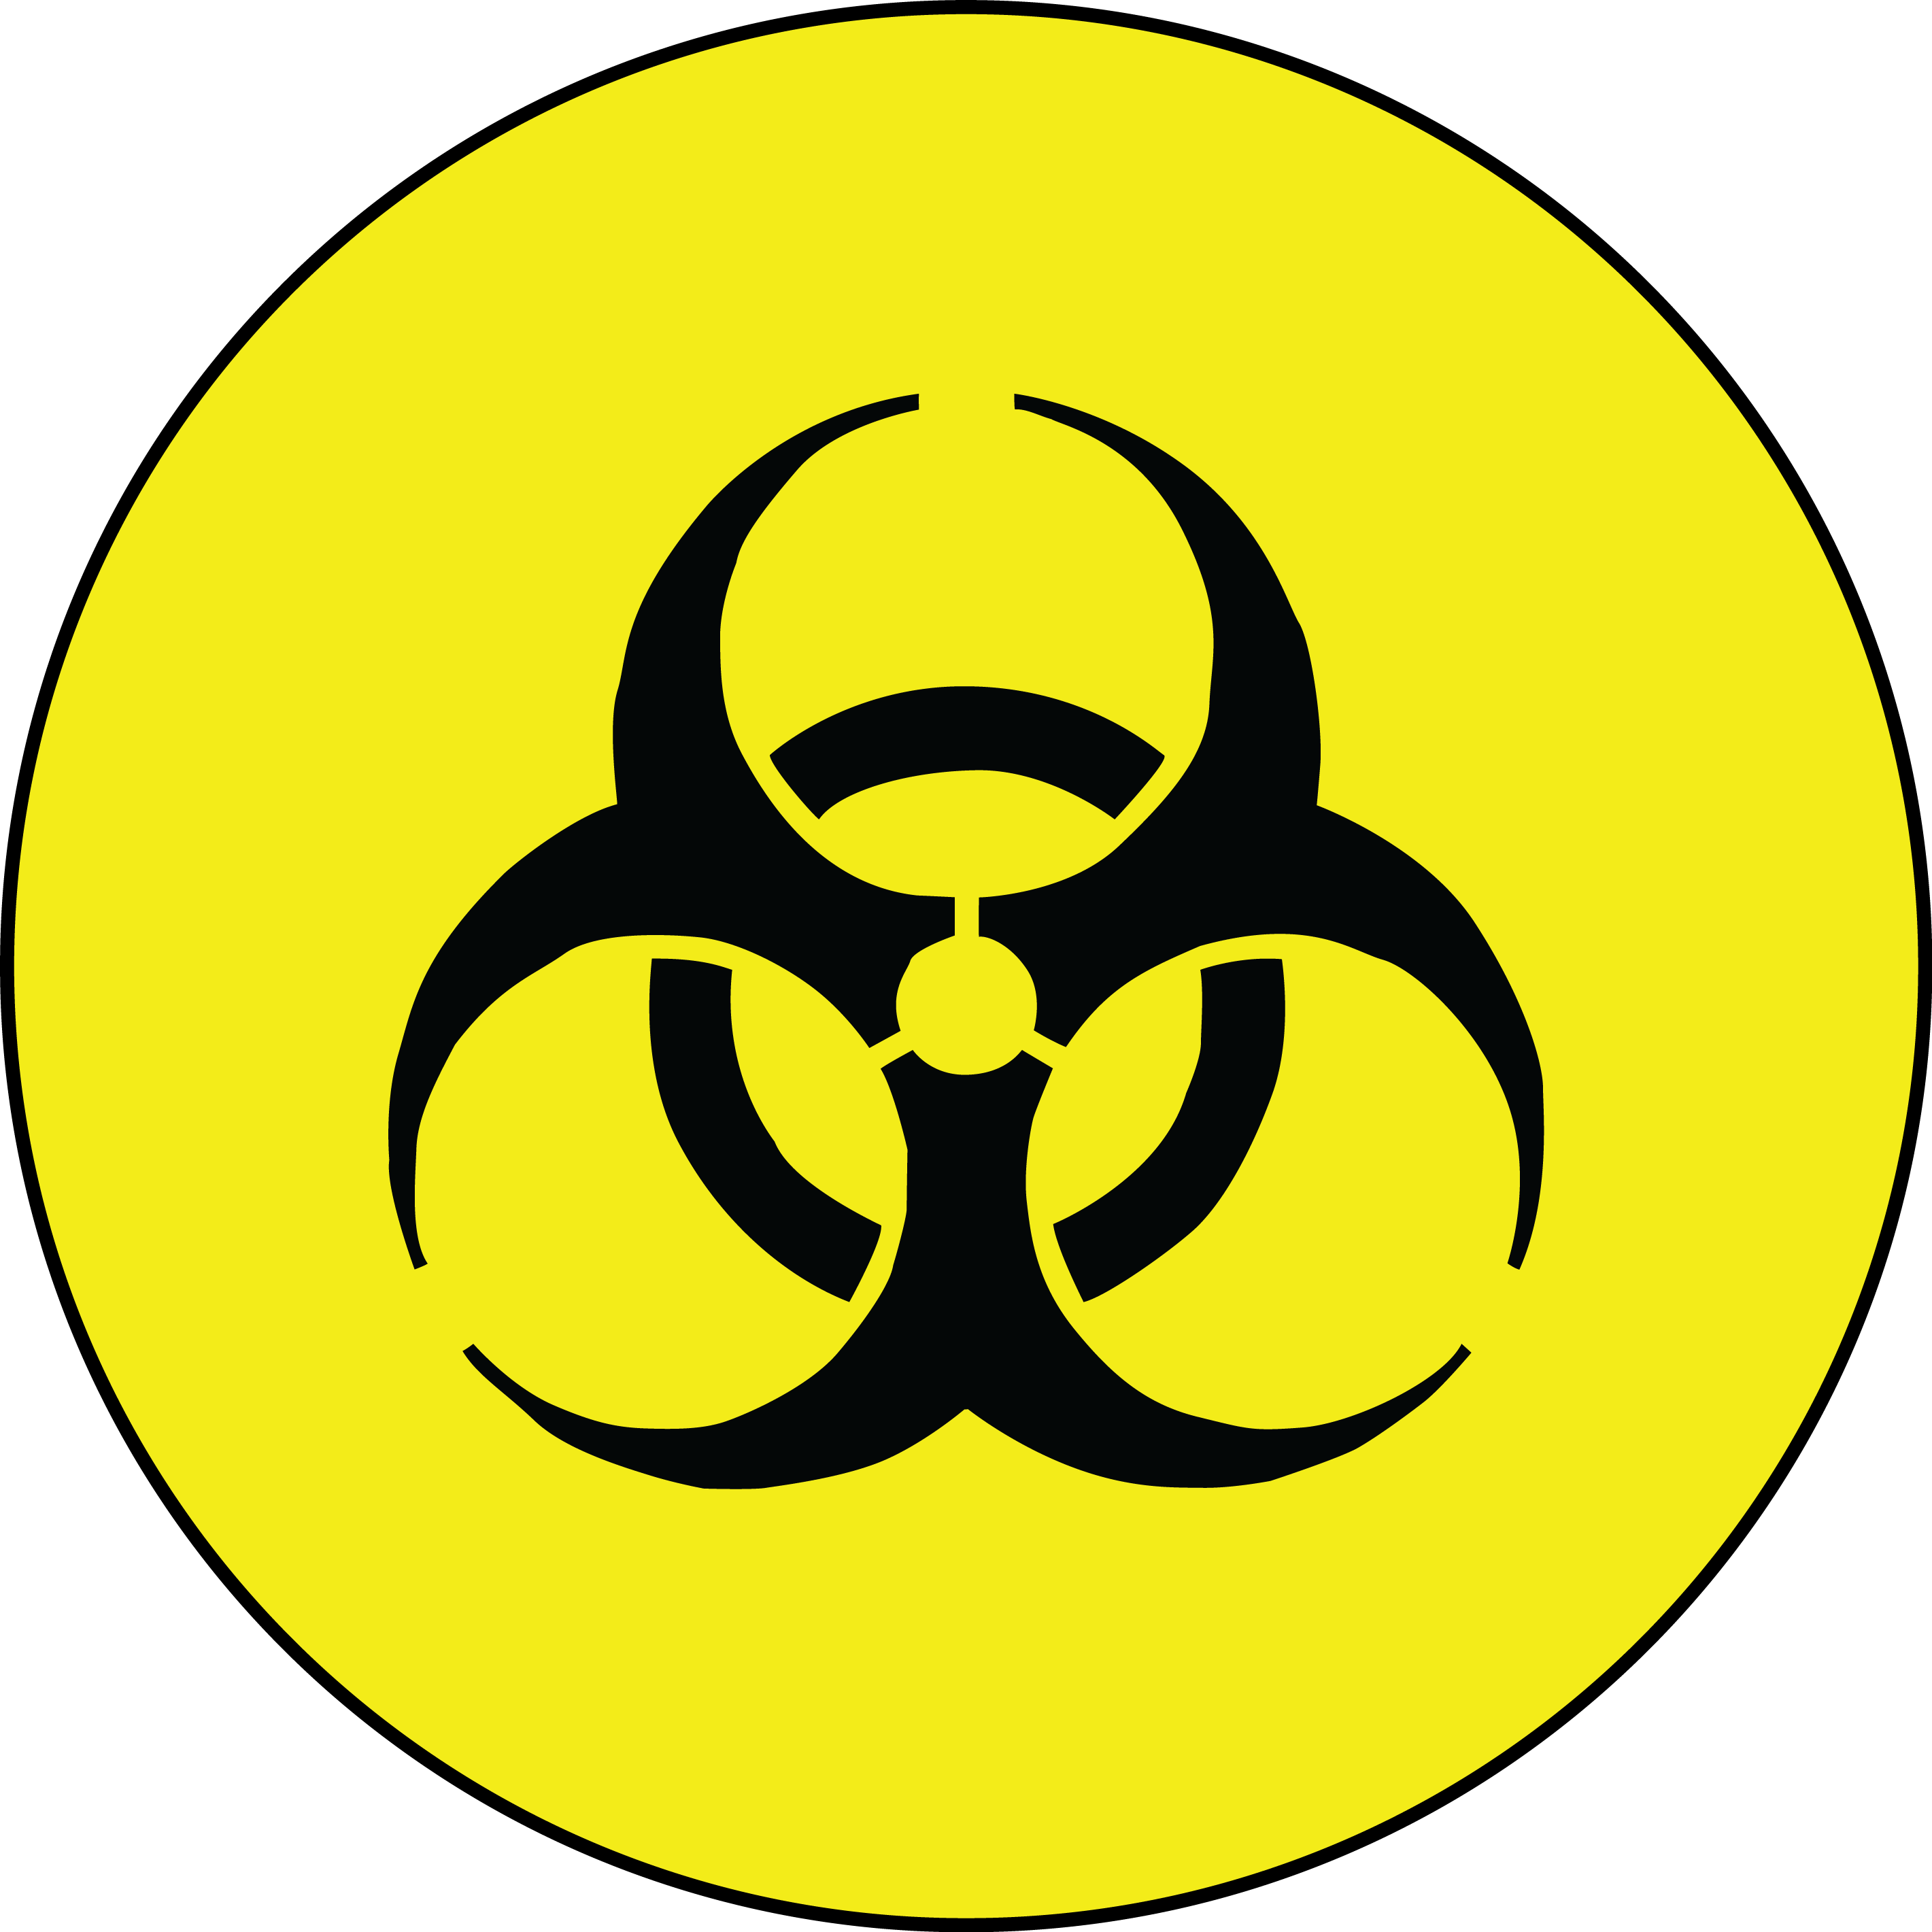 biohazard-symbol-free-download-png-png-all